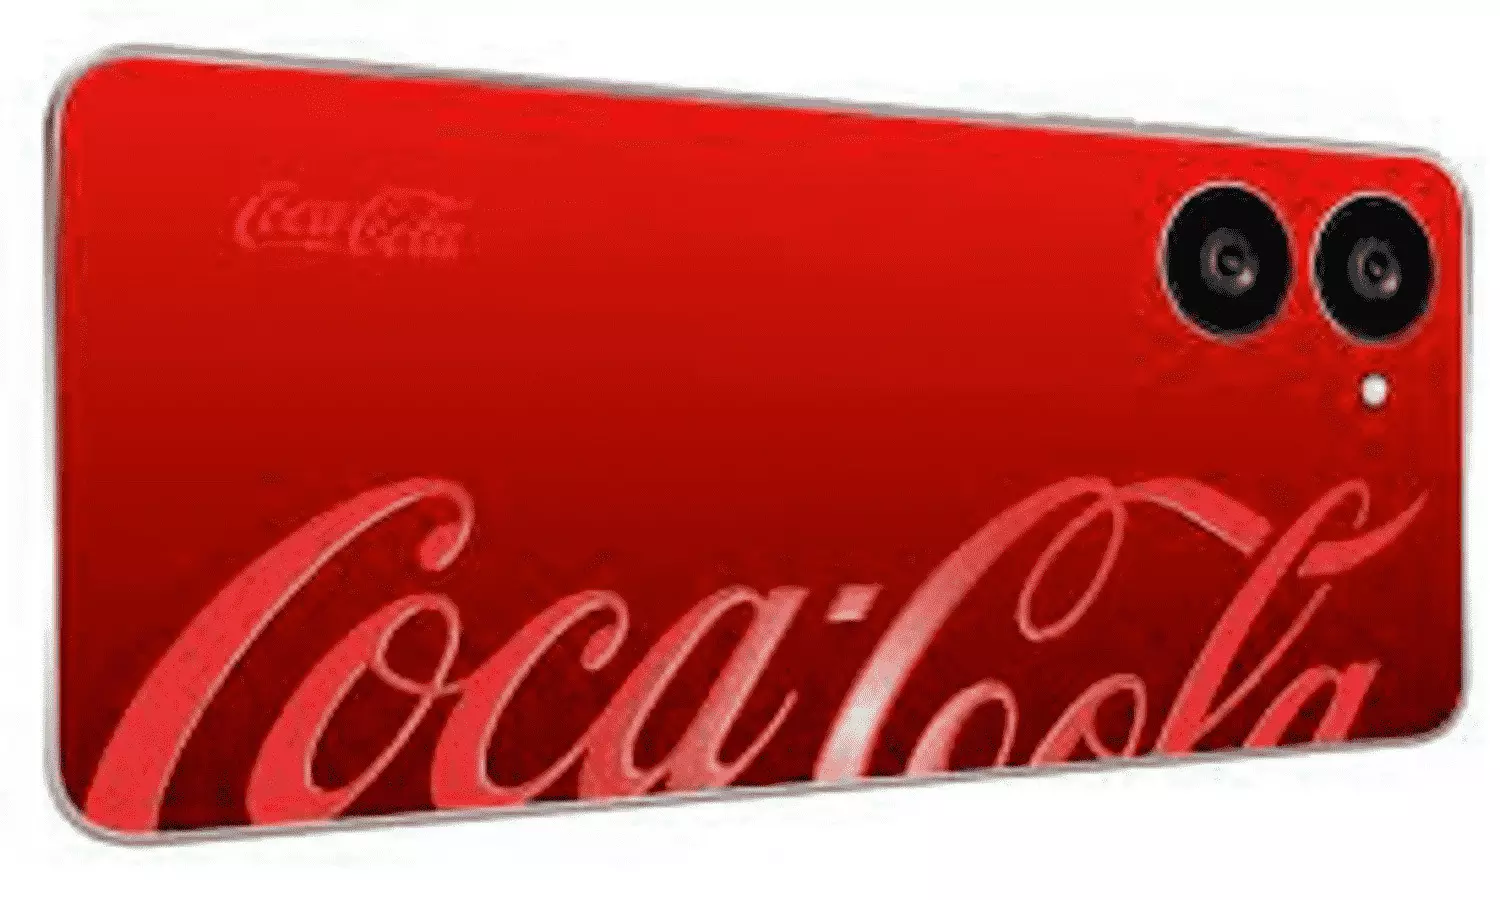 Coca Cola Smartphone